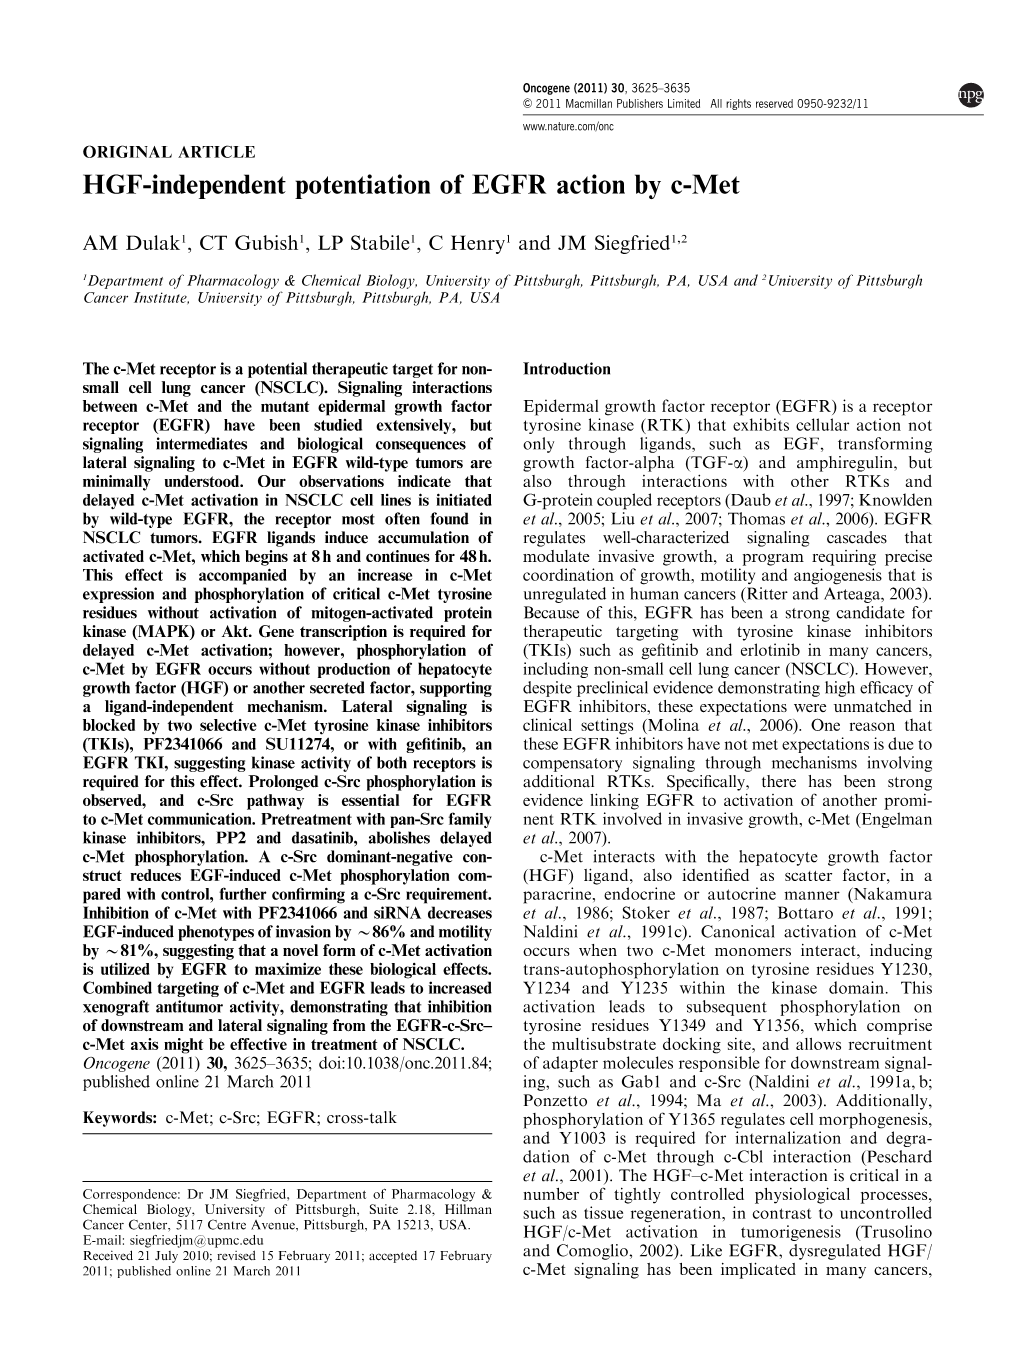 HGF-Independent Potentiation of EGFR Action by C-Met